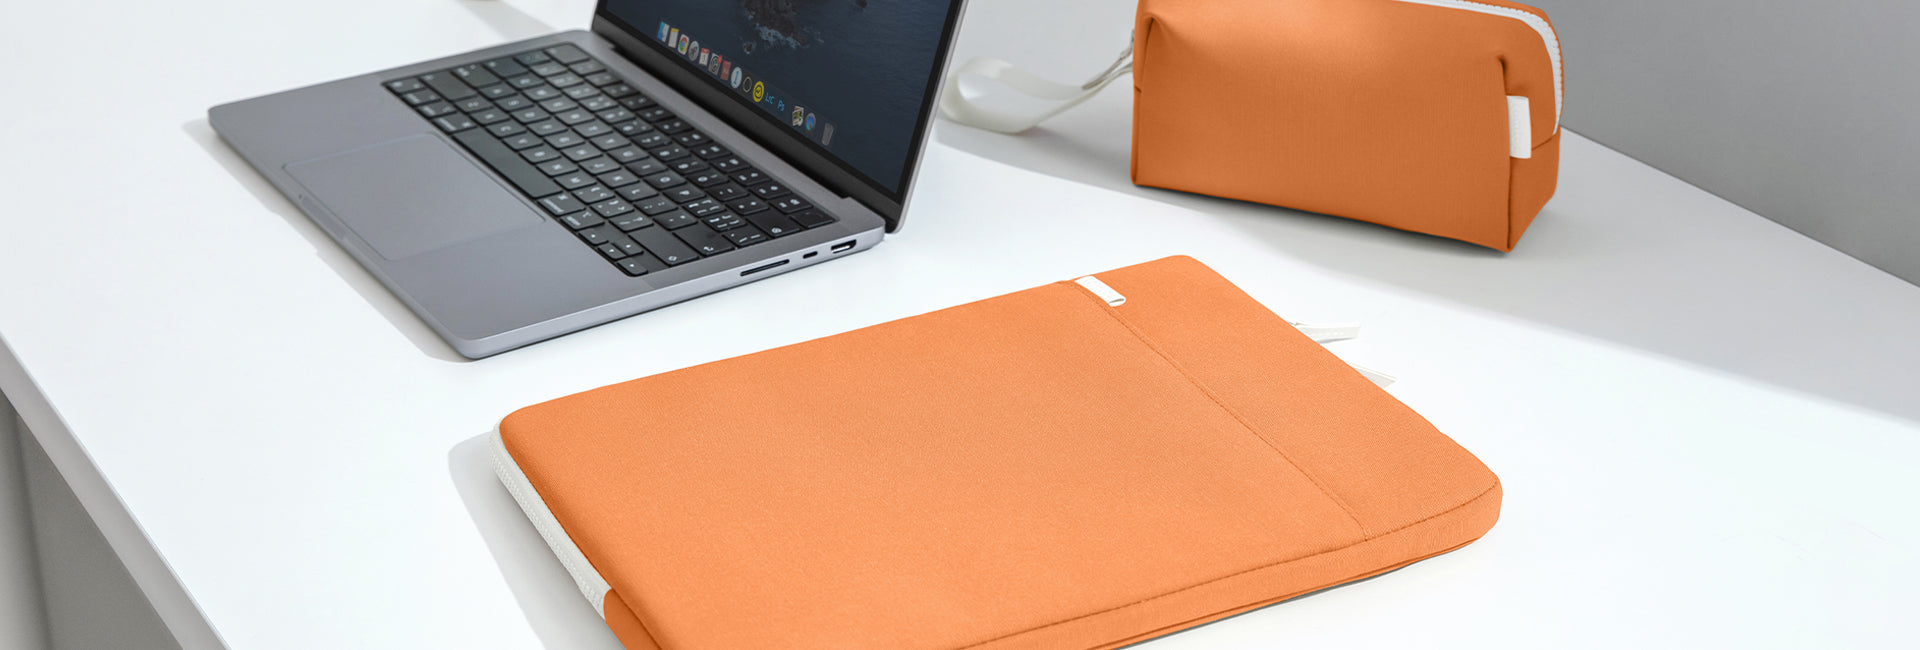 laptop sleeve for Macbook